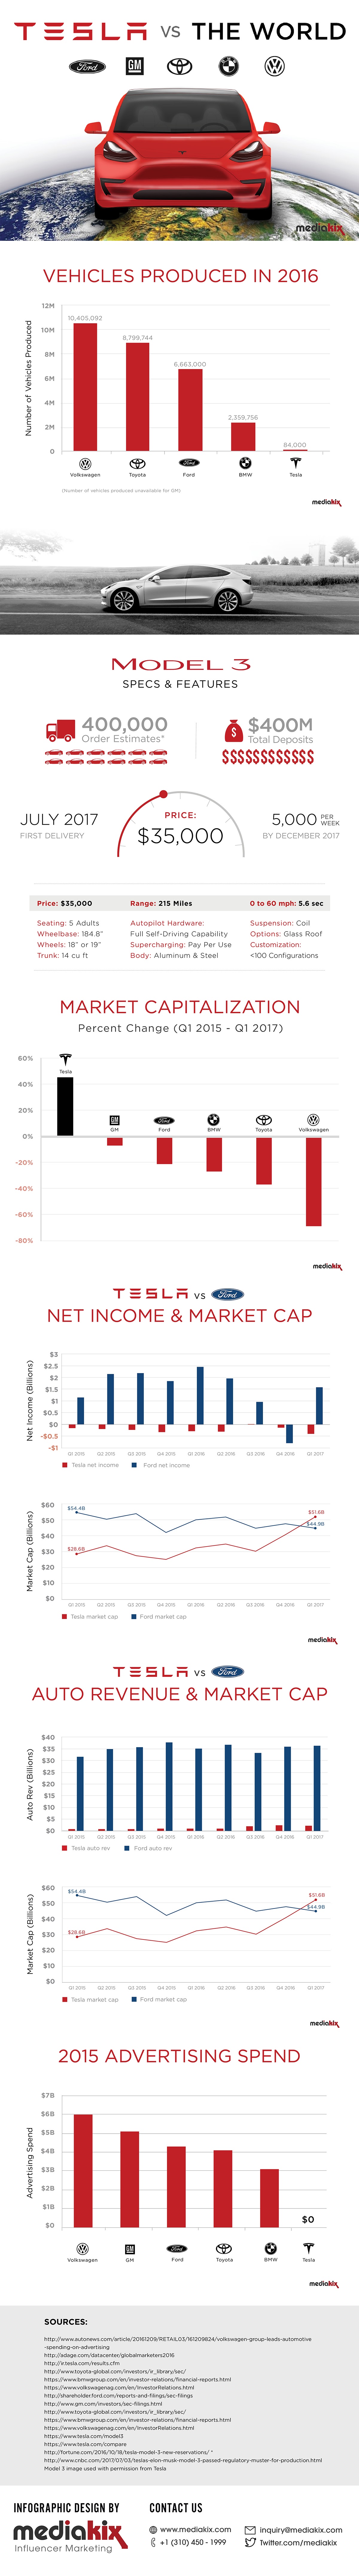 Tesla model 3 market cap revenue infographic - tesland.com